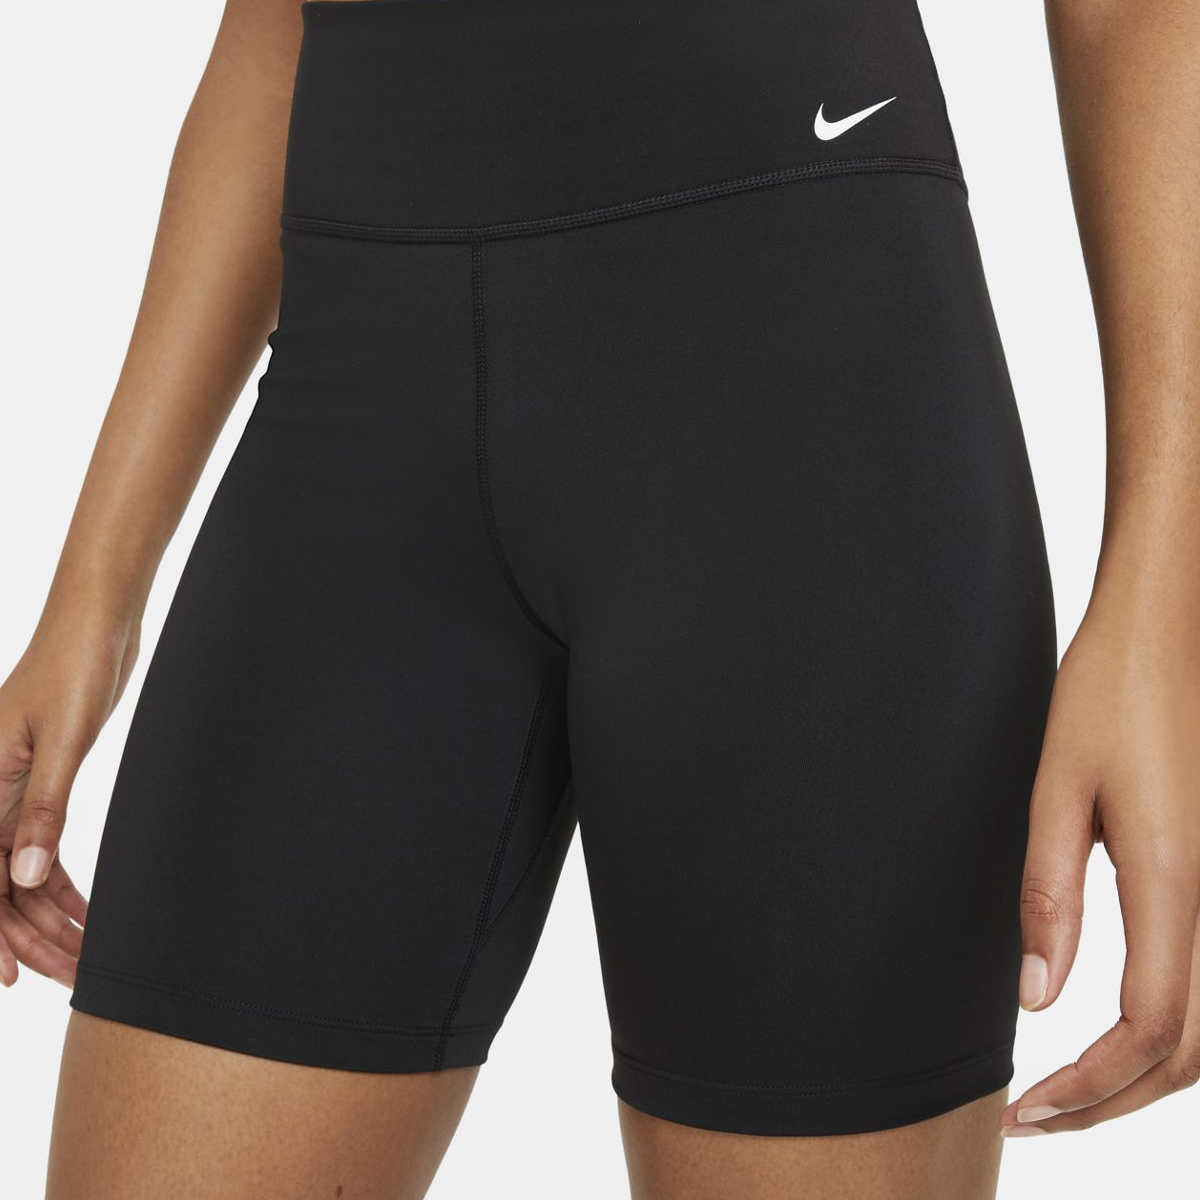 Nike One Short, , large image number null